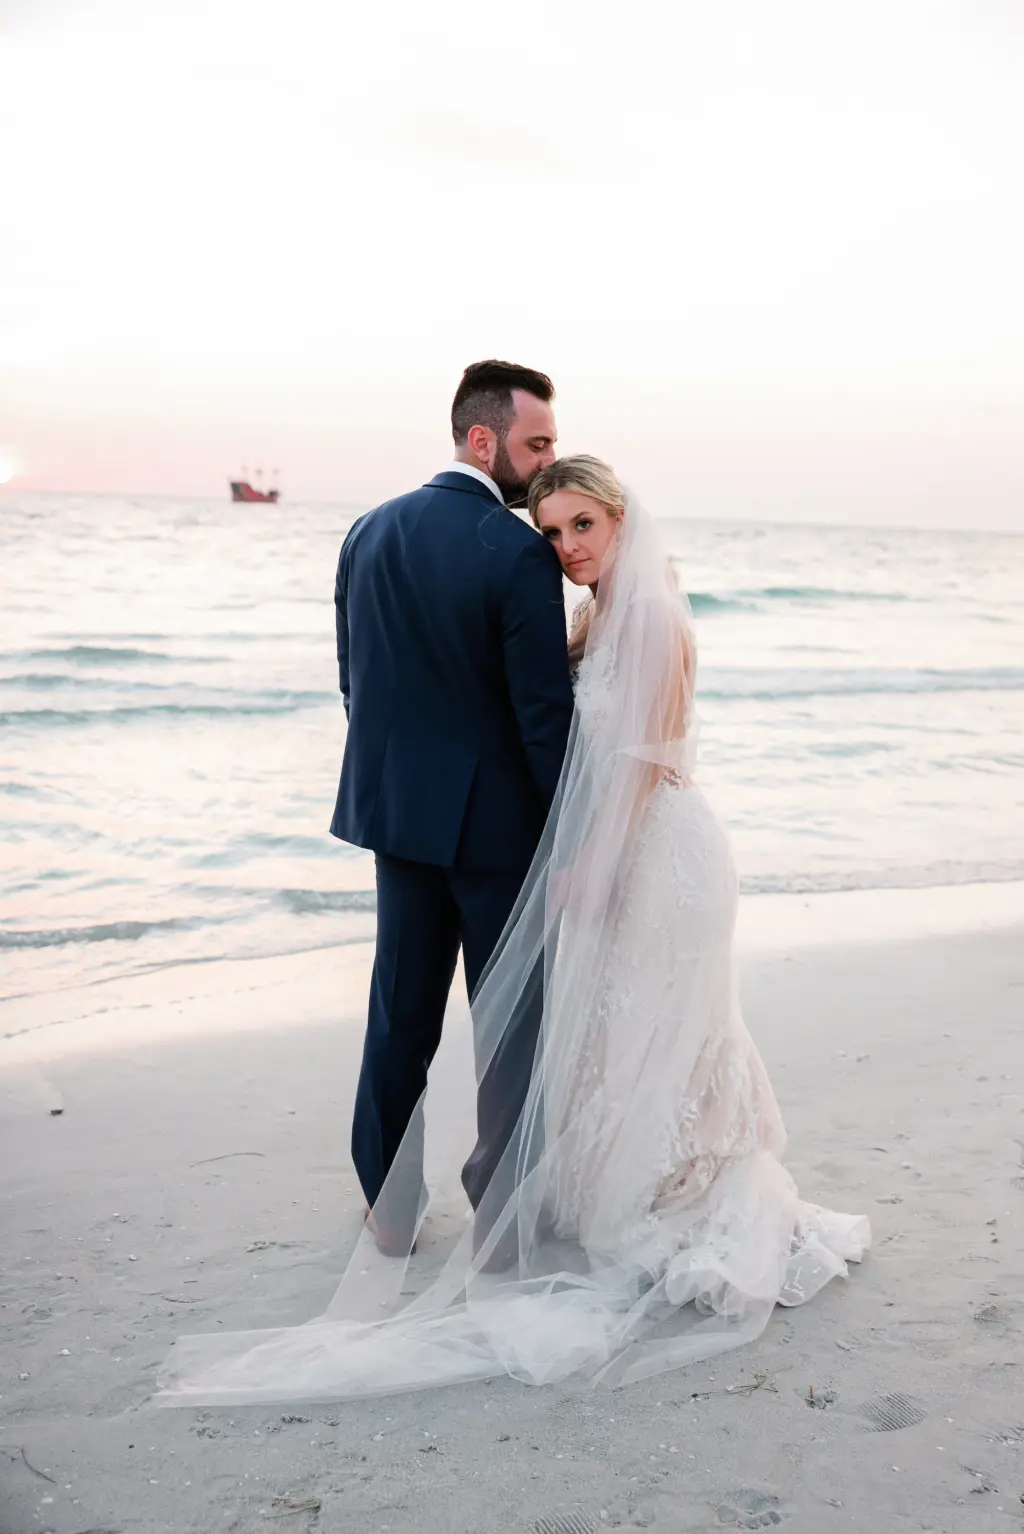 Bride and Groom Clearwater Beach Sunset Wedding Portrait | Tampa Bay Photographer Lifelong Photography Studio | Venue Hyatt Regency Clearwater Beach | Planner Coastal Coordinating